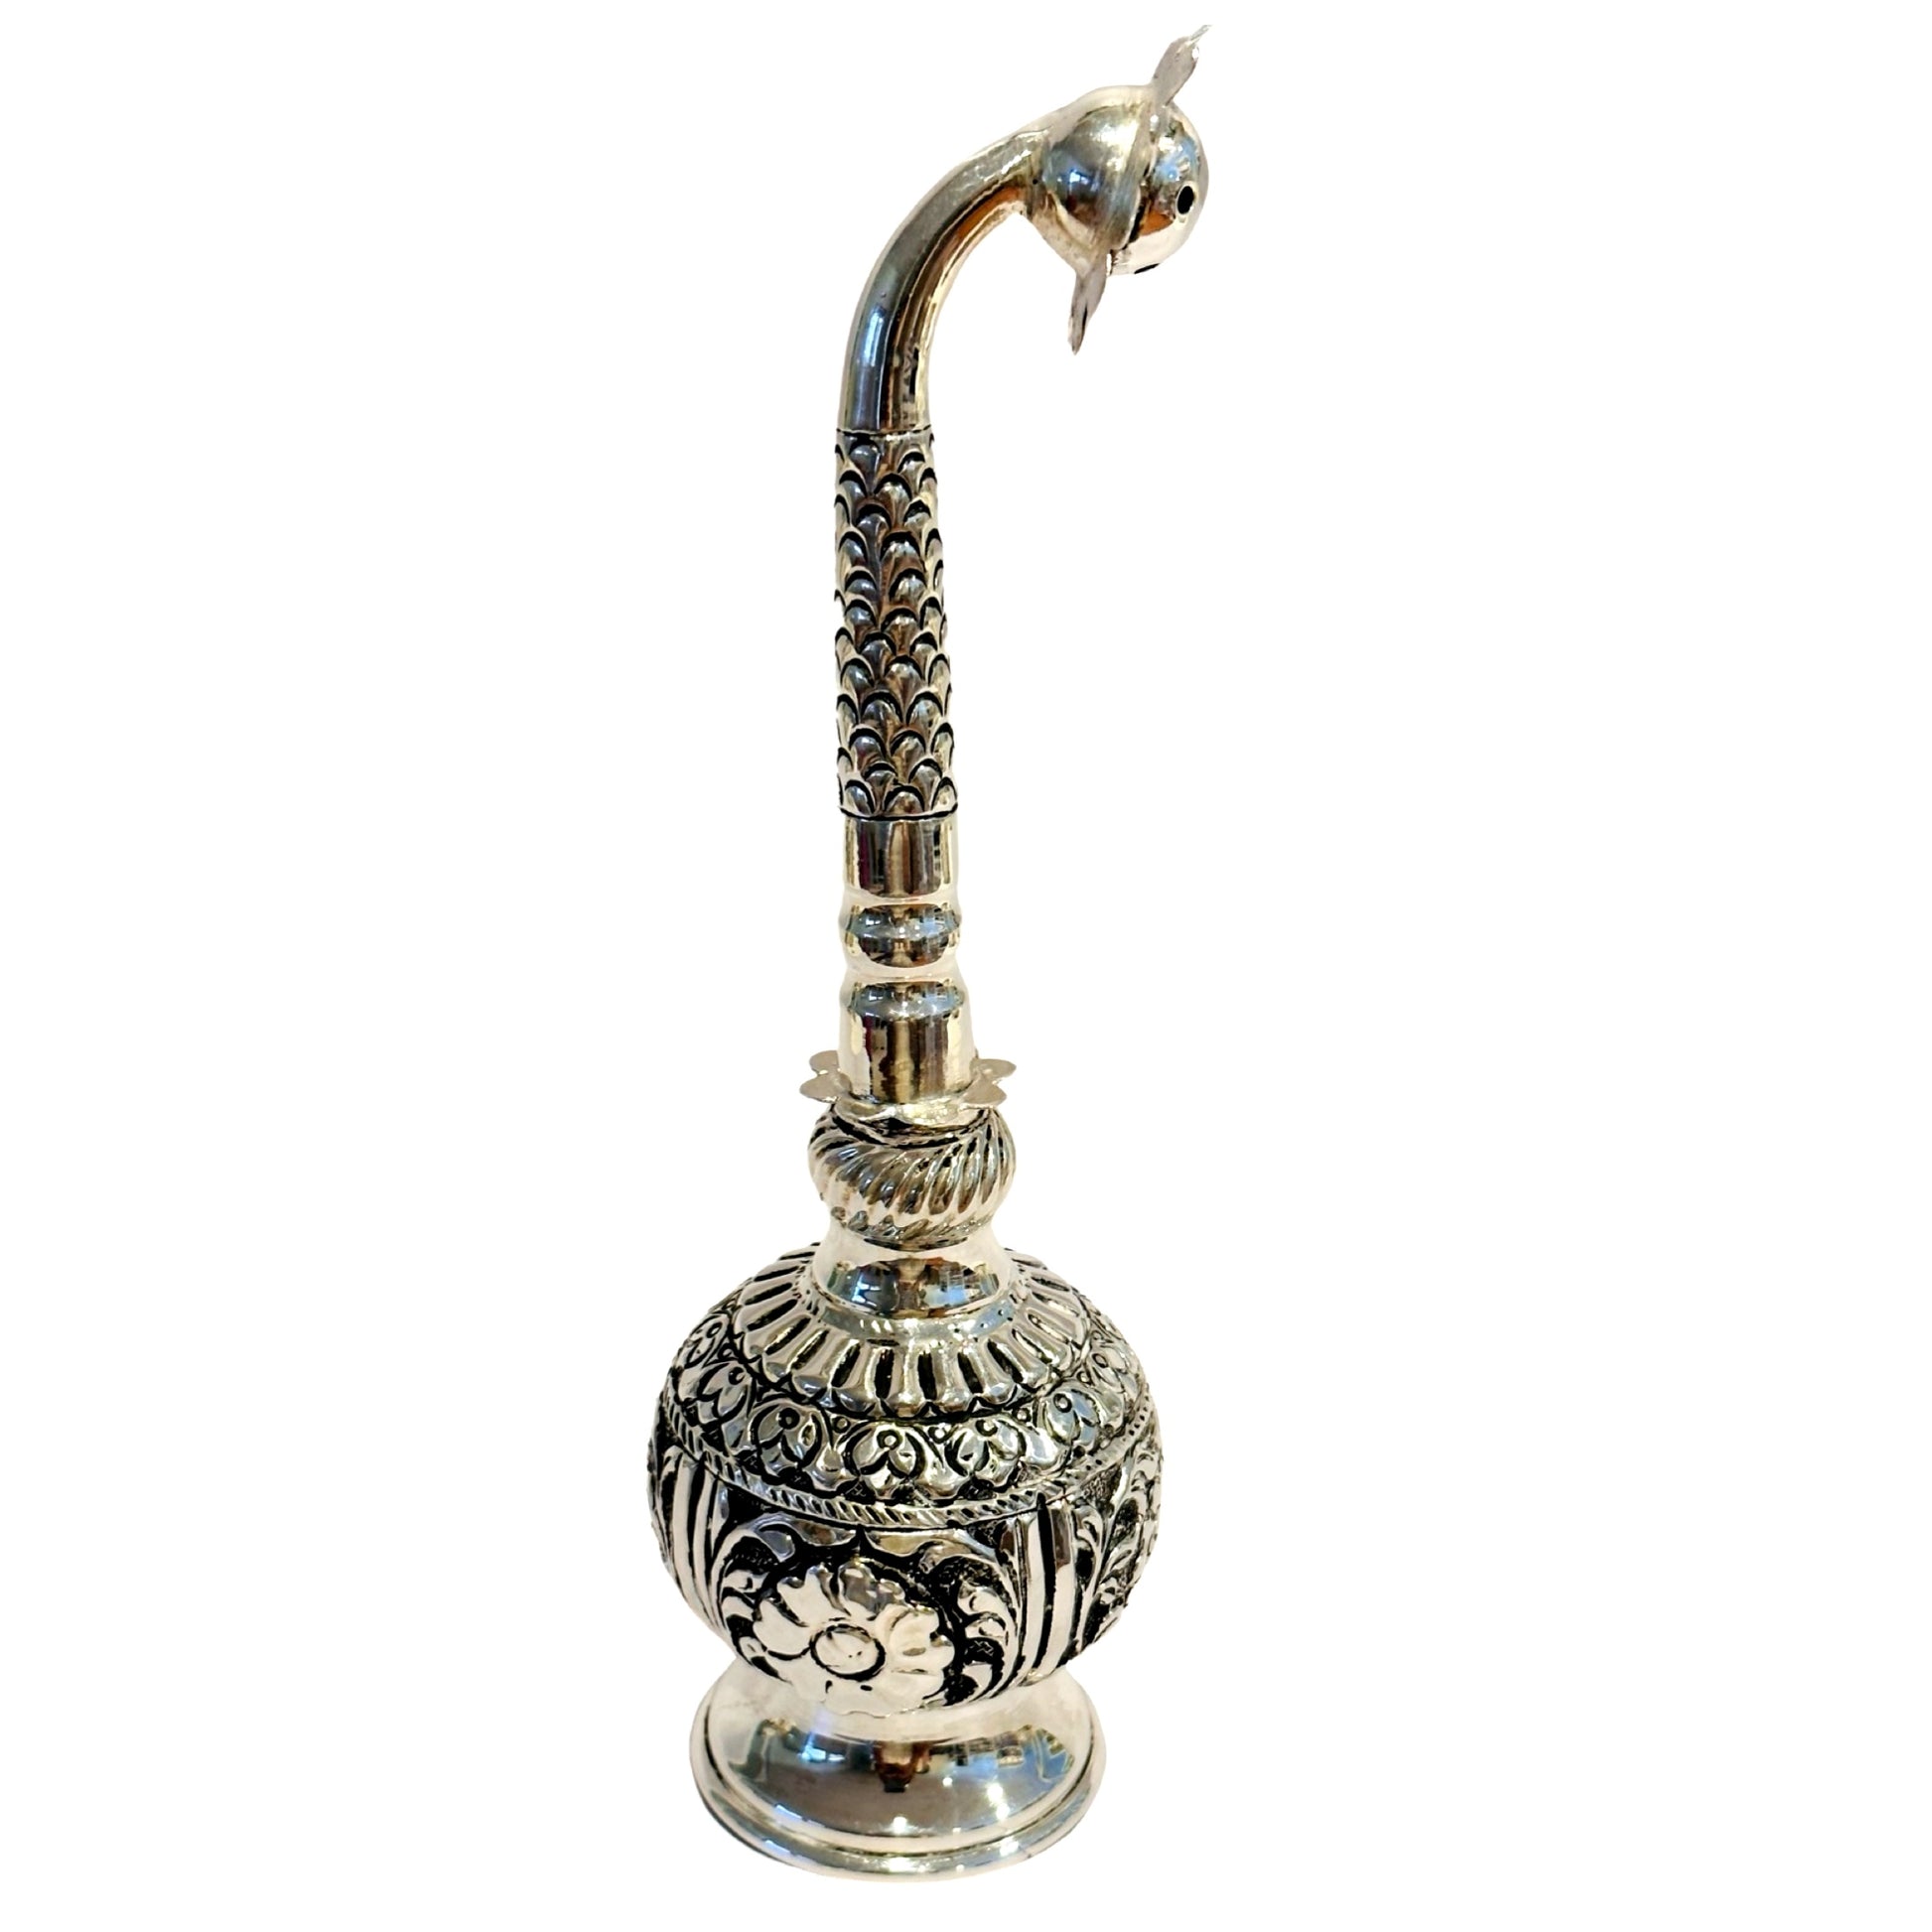 Handmade silver sprinkler-Traditional Indian item